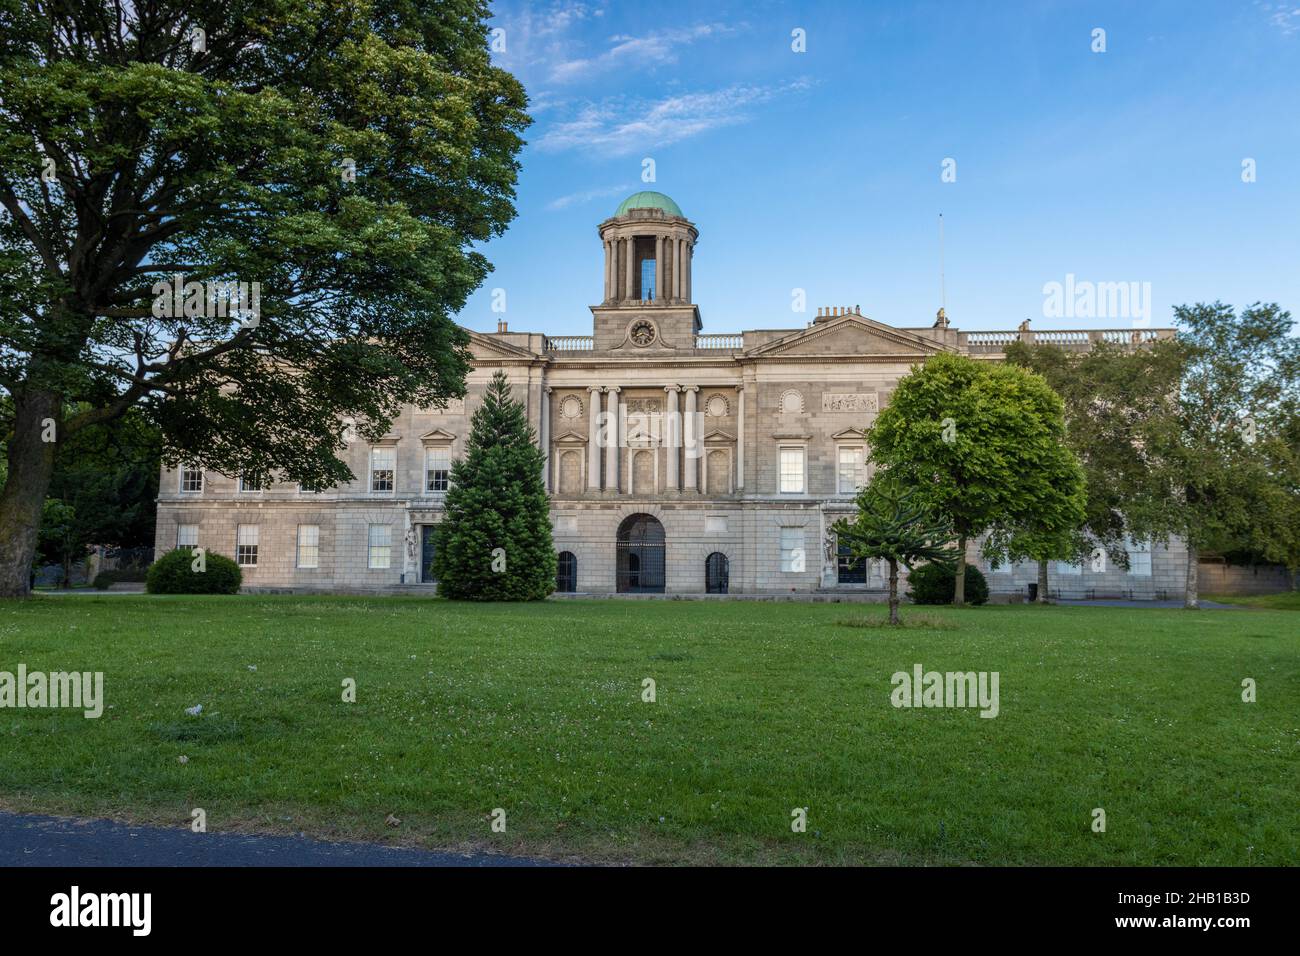 DUBLIN, IRELAND - Jul 24, 2021: The King's Inn Park in Dublin, Ireland Stock Photo